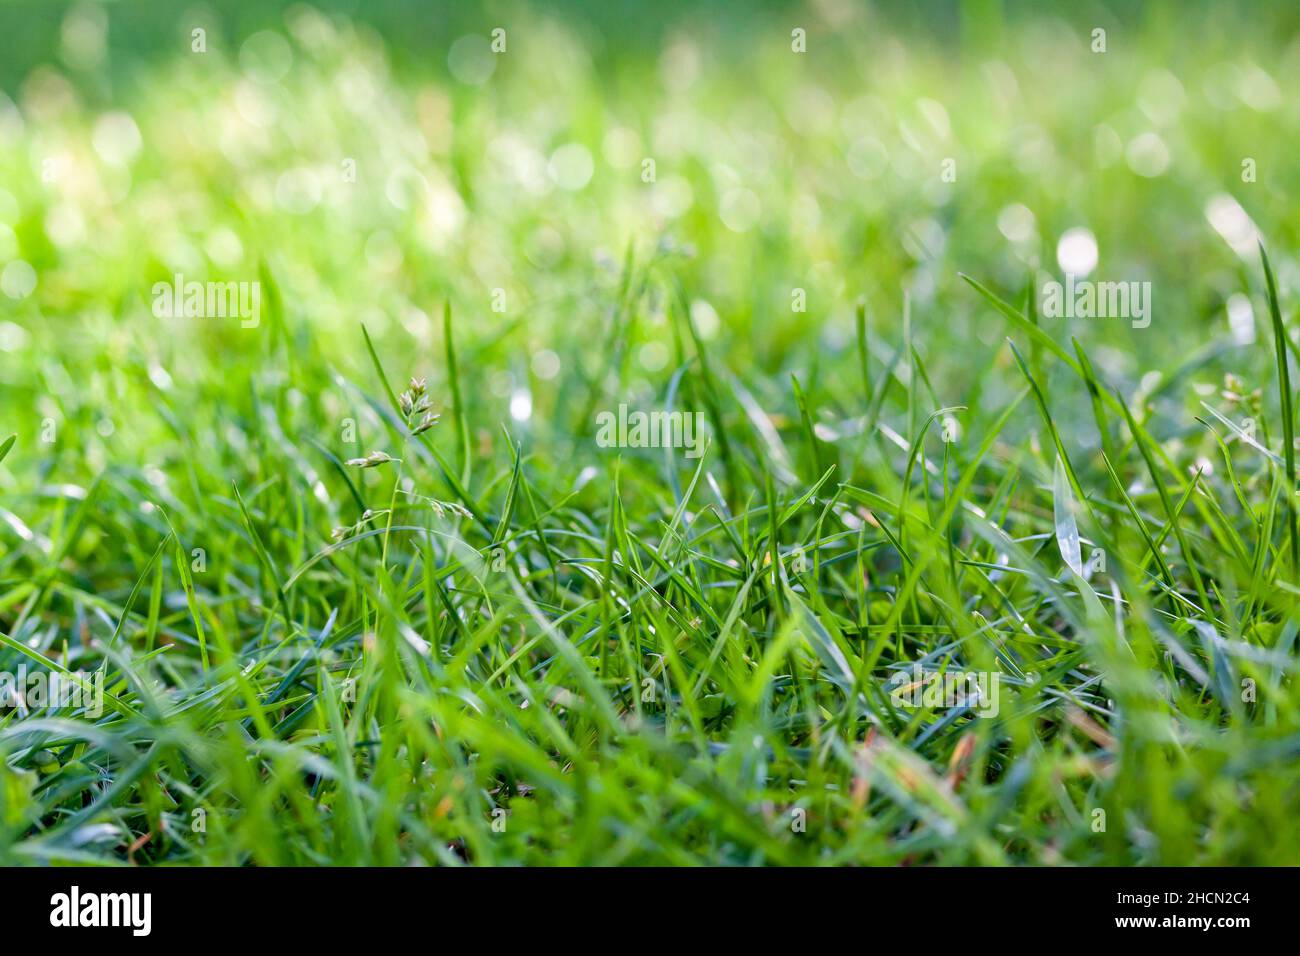 Selektiv von grünem Gras auf einem Feld Stockfoto